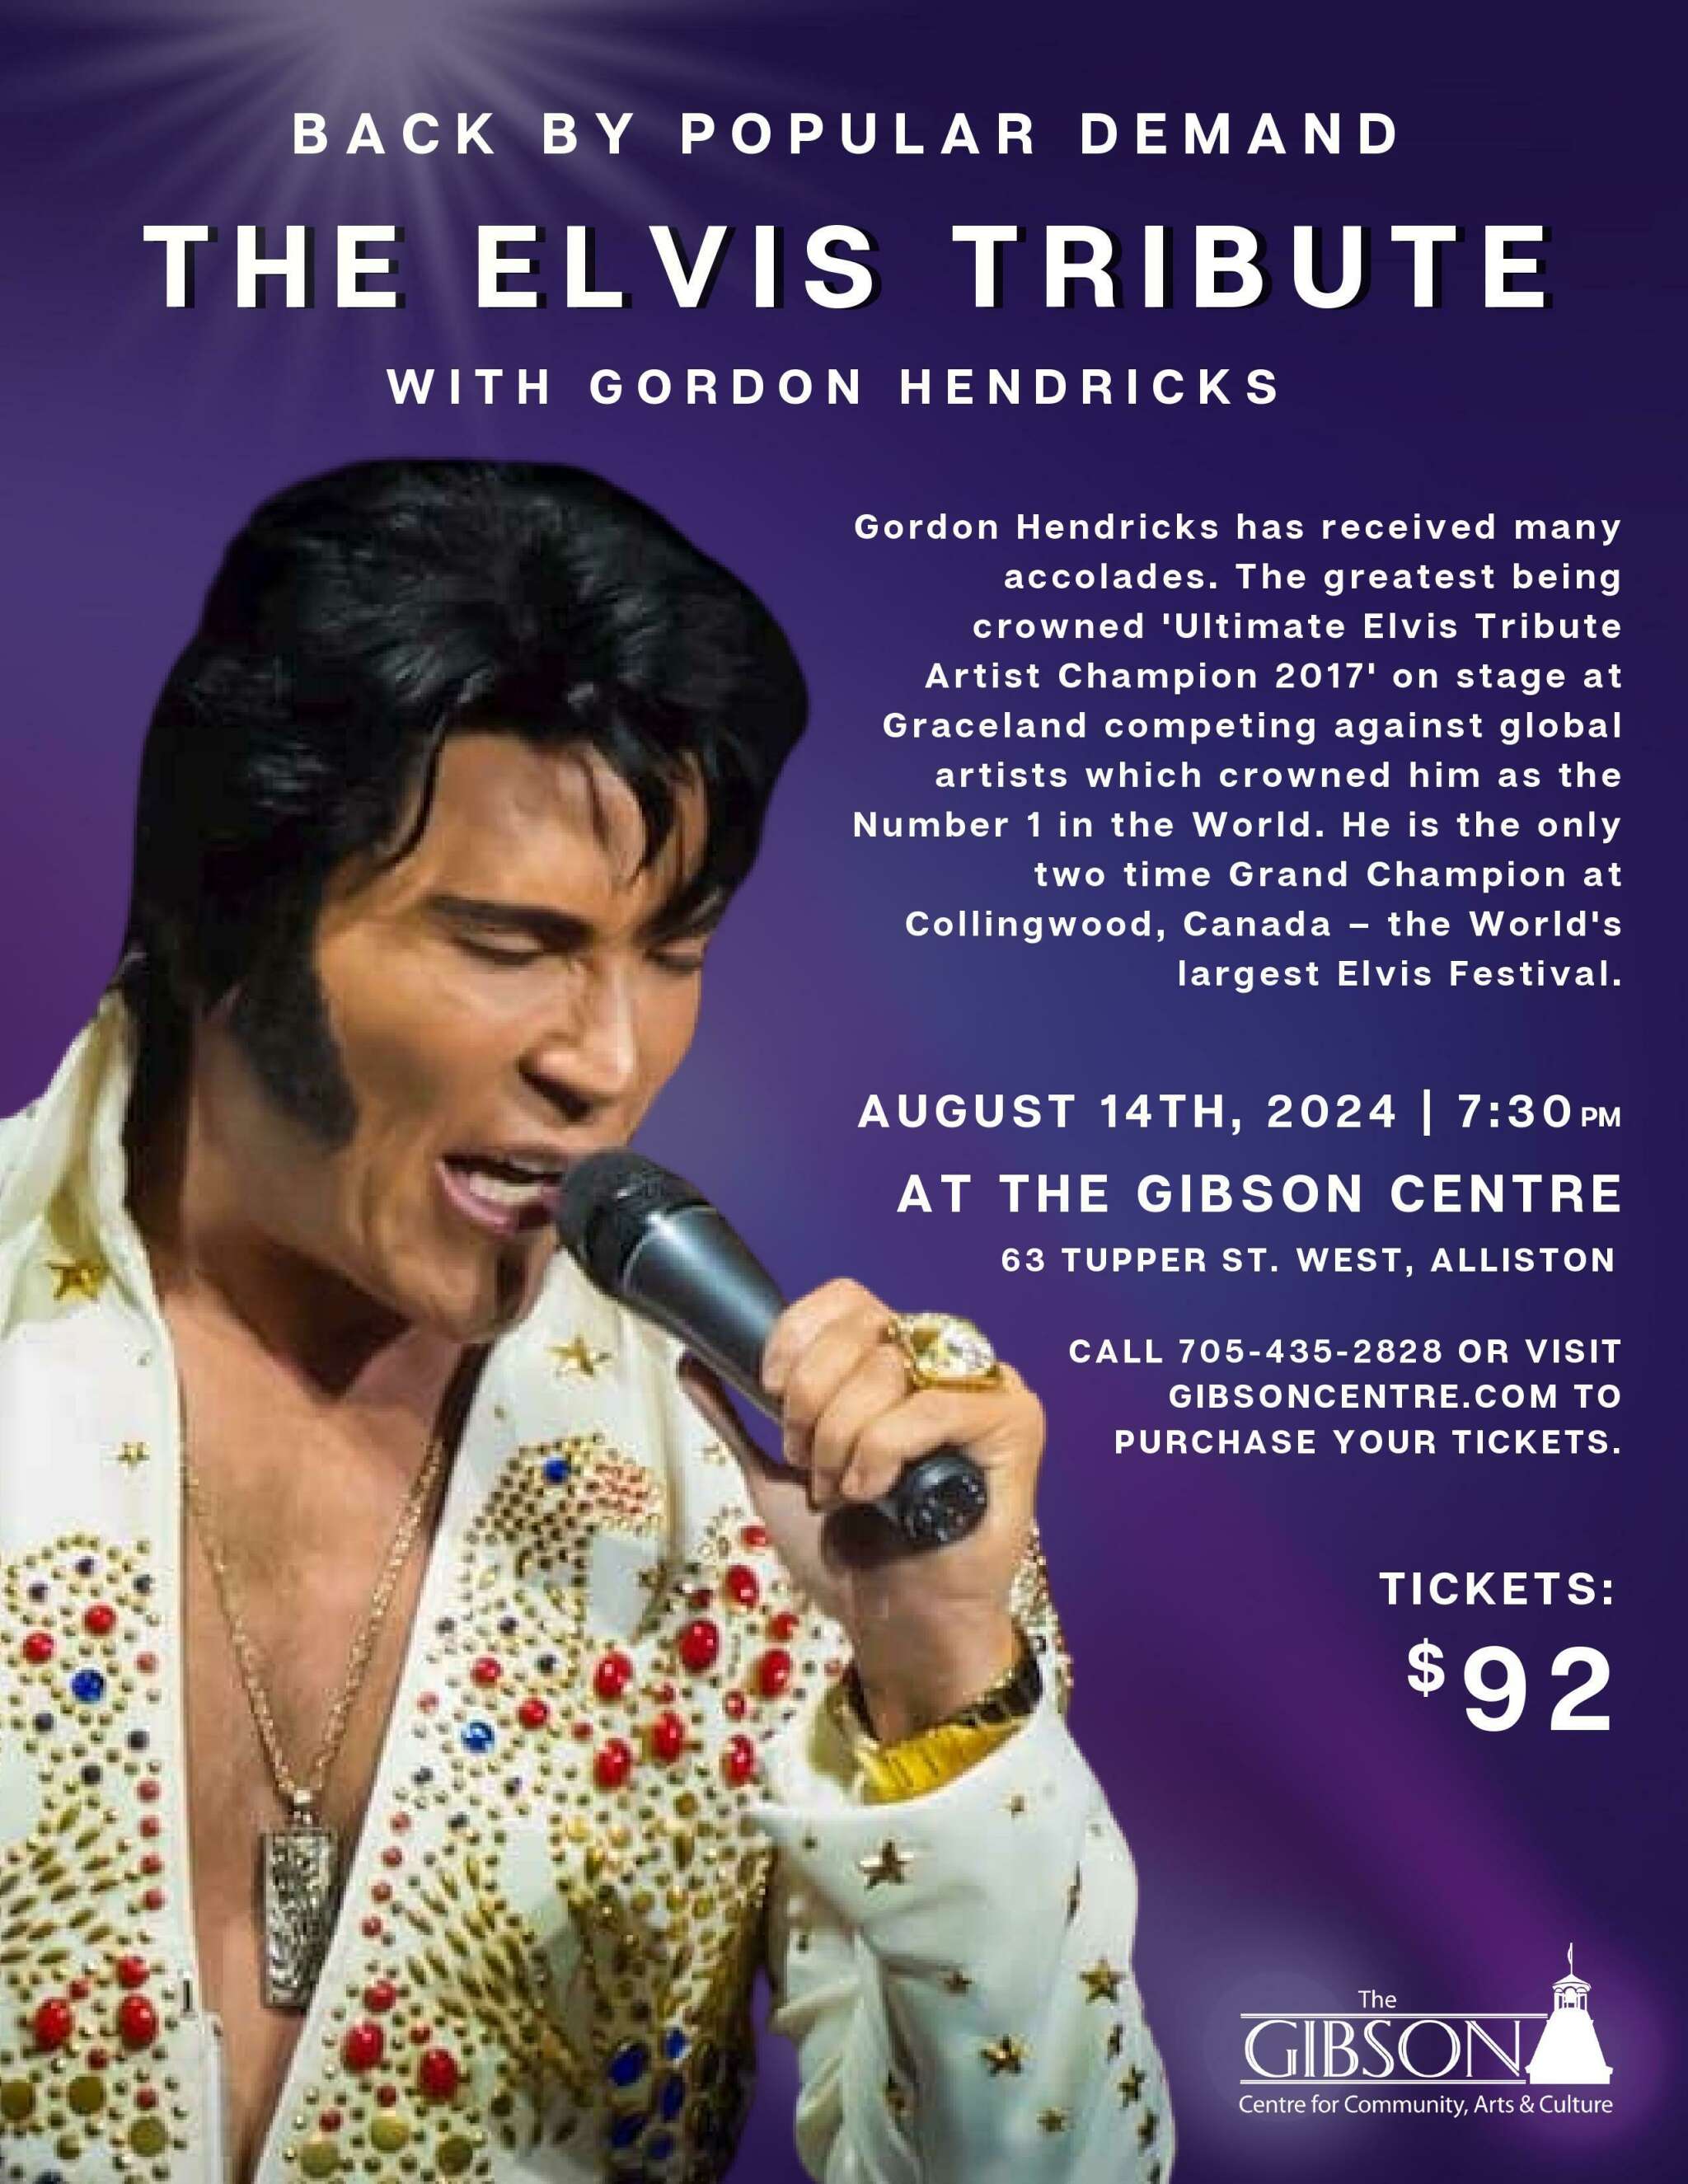 The Elvis Tribute